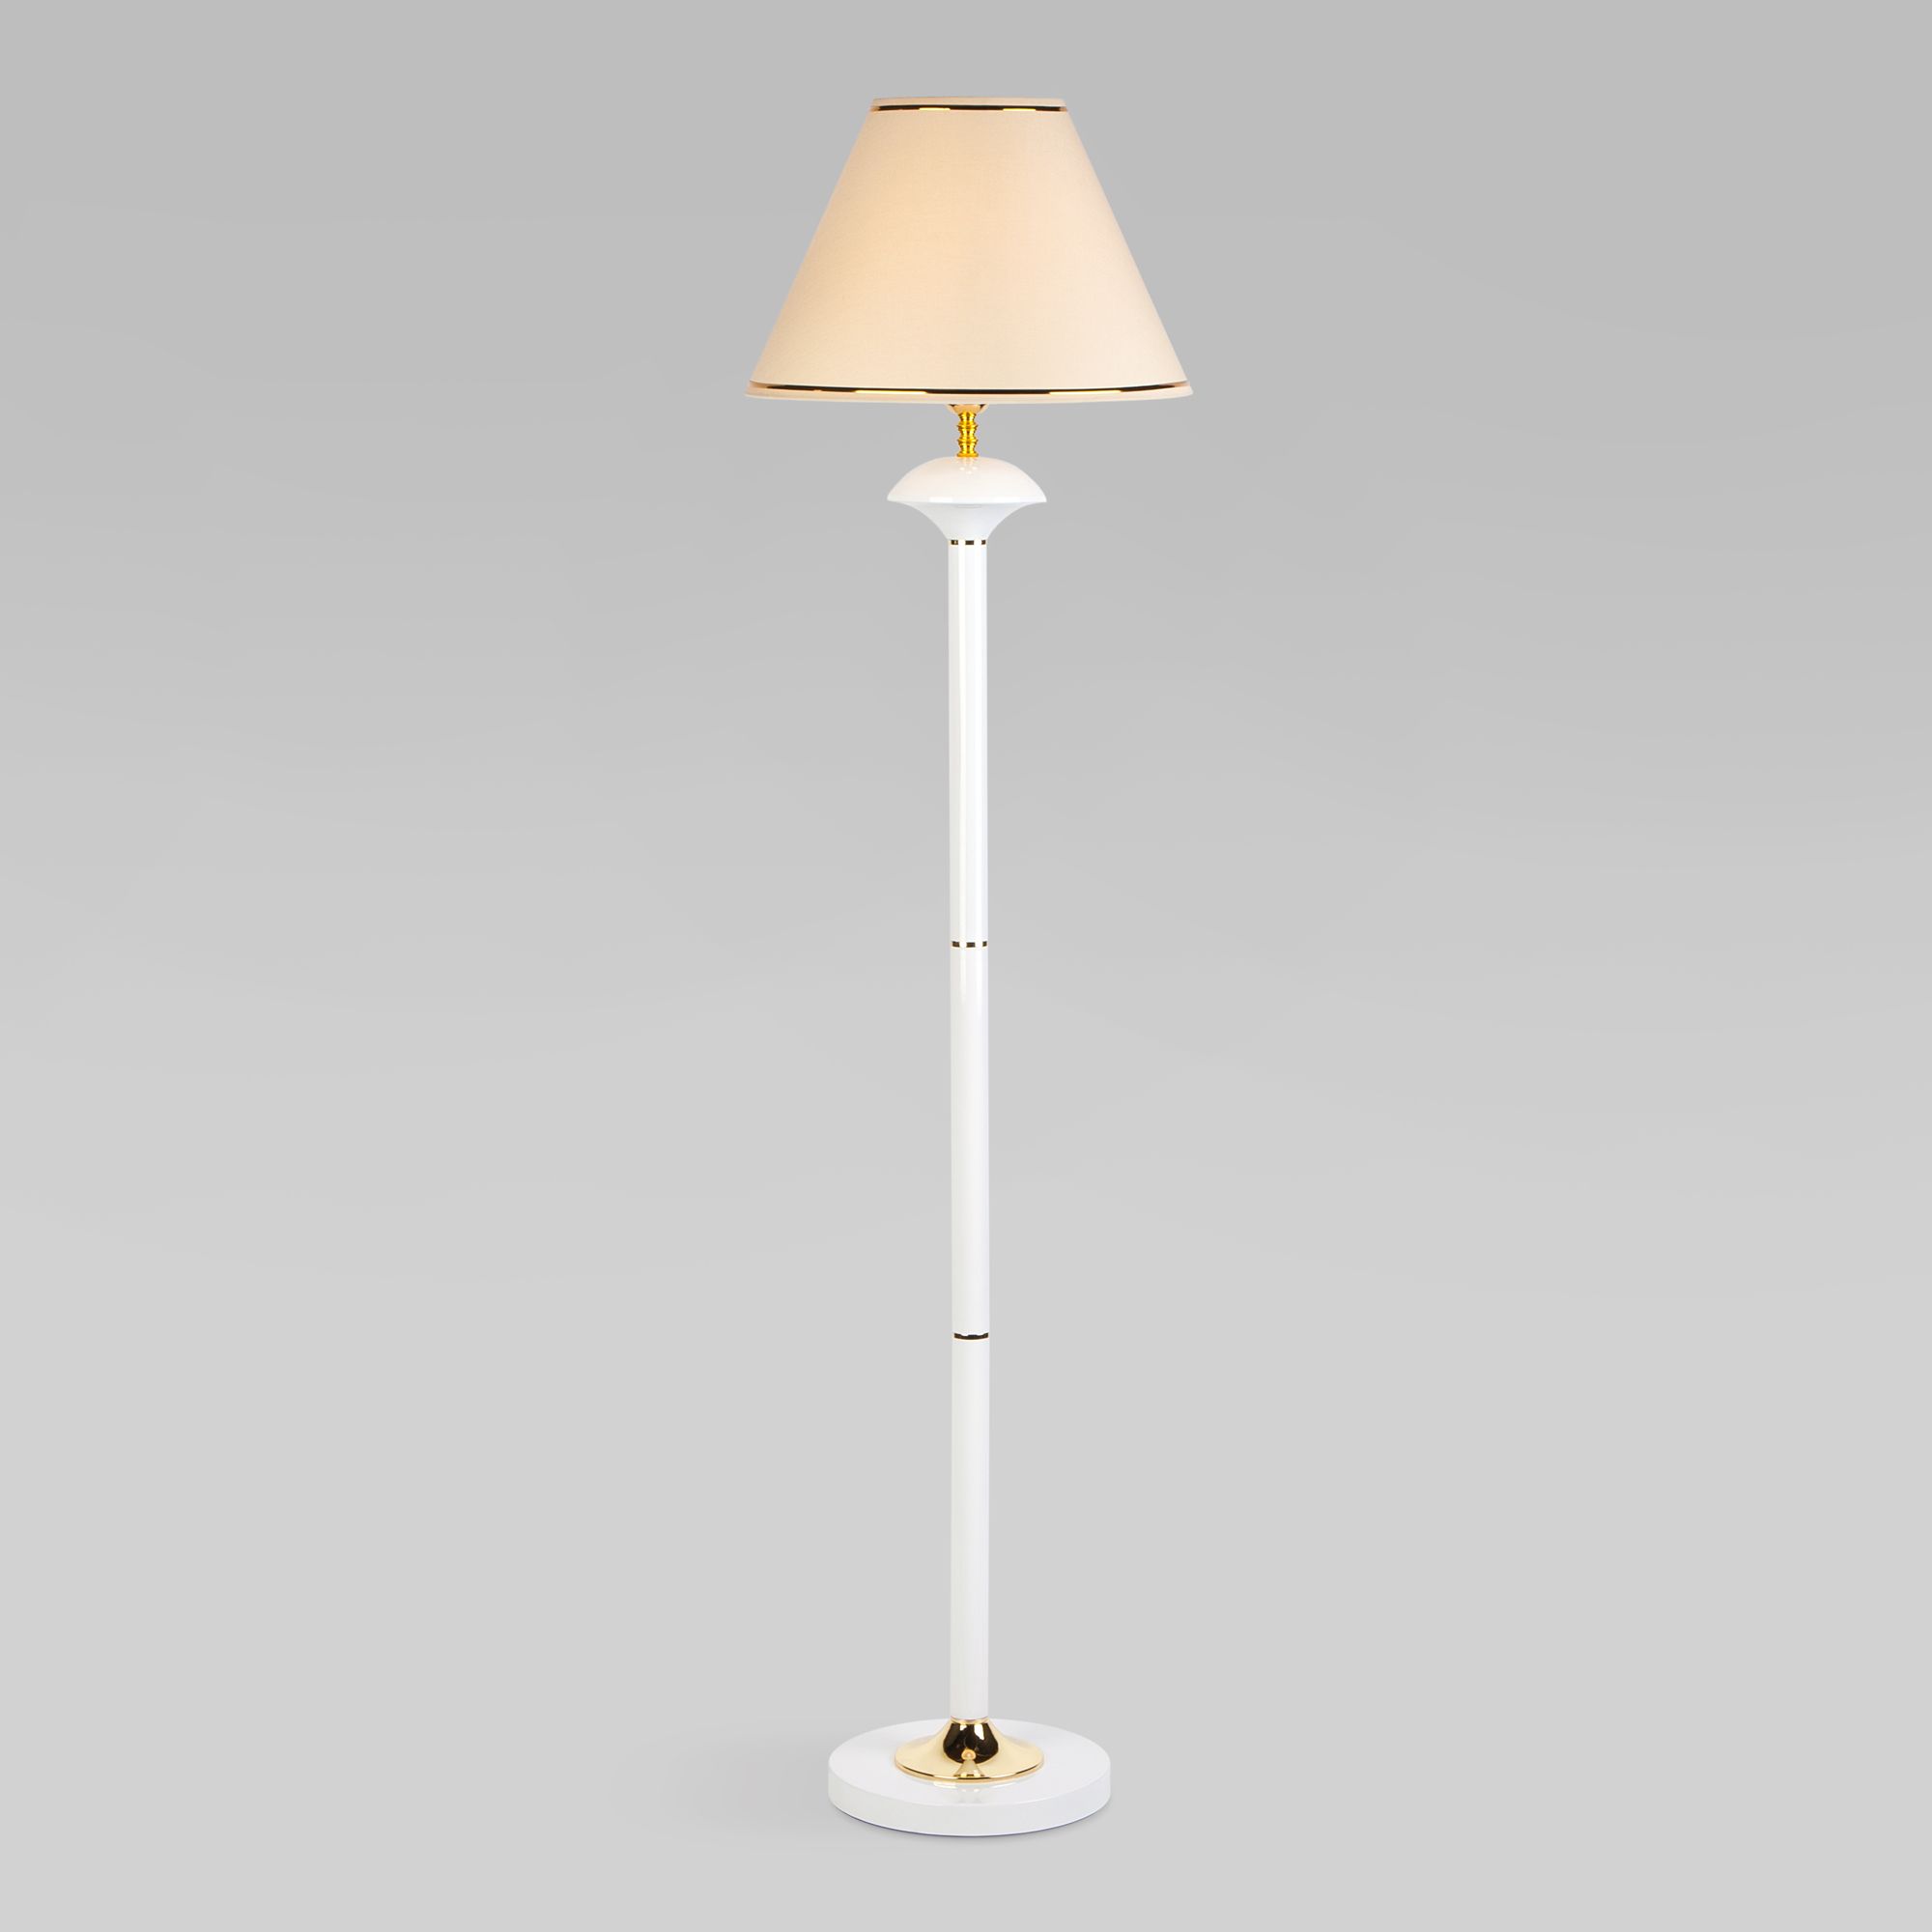 Напольный светильник с абажуром Eurosvet Lorenzo 01086/1 глянцевый белый. Фото 2